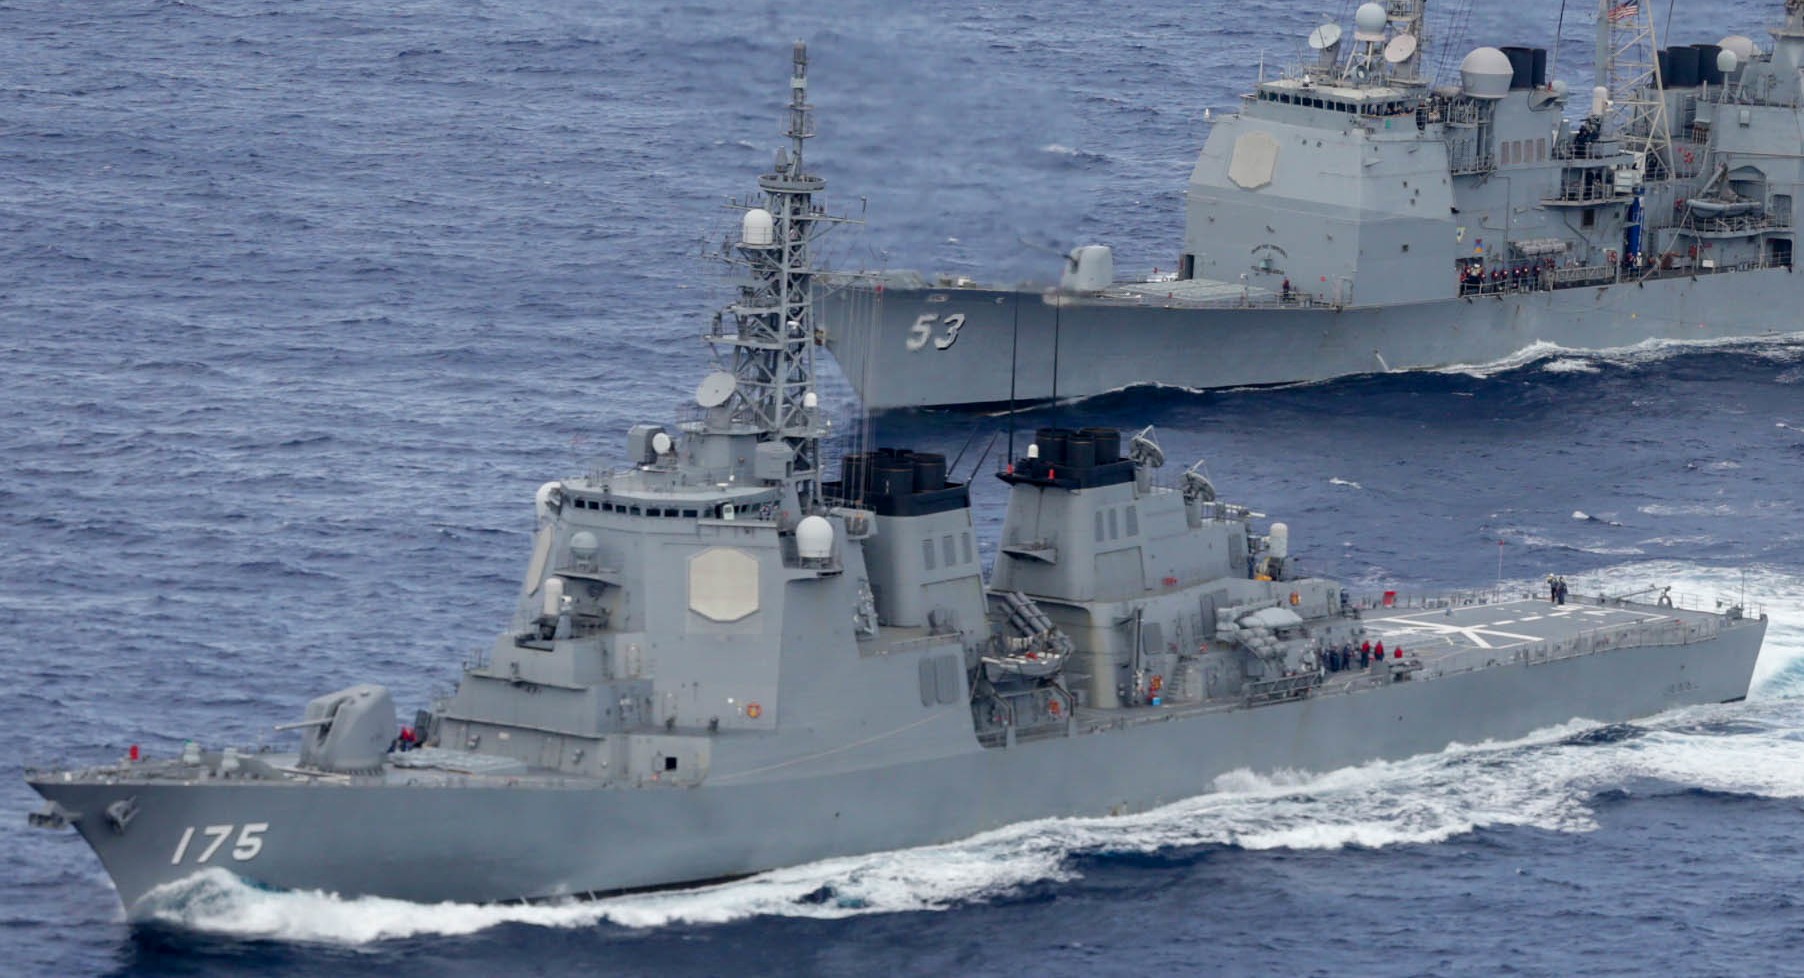 ddg-175 js myoko kongo class guided missile destroyer aegis japan maritime self defense force jmsdf 36